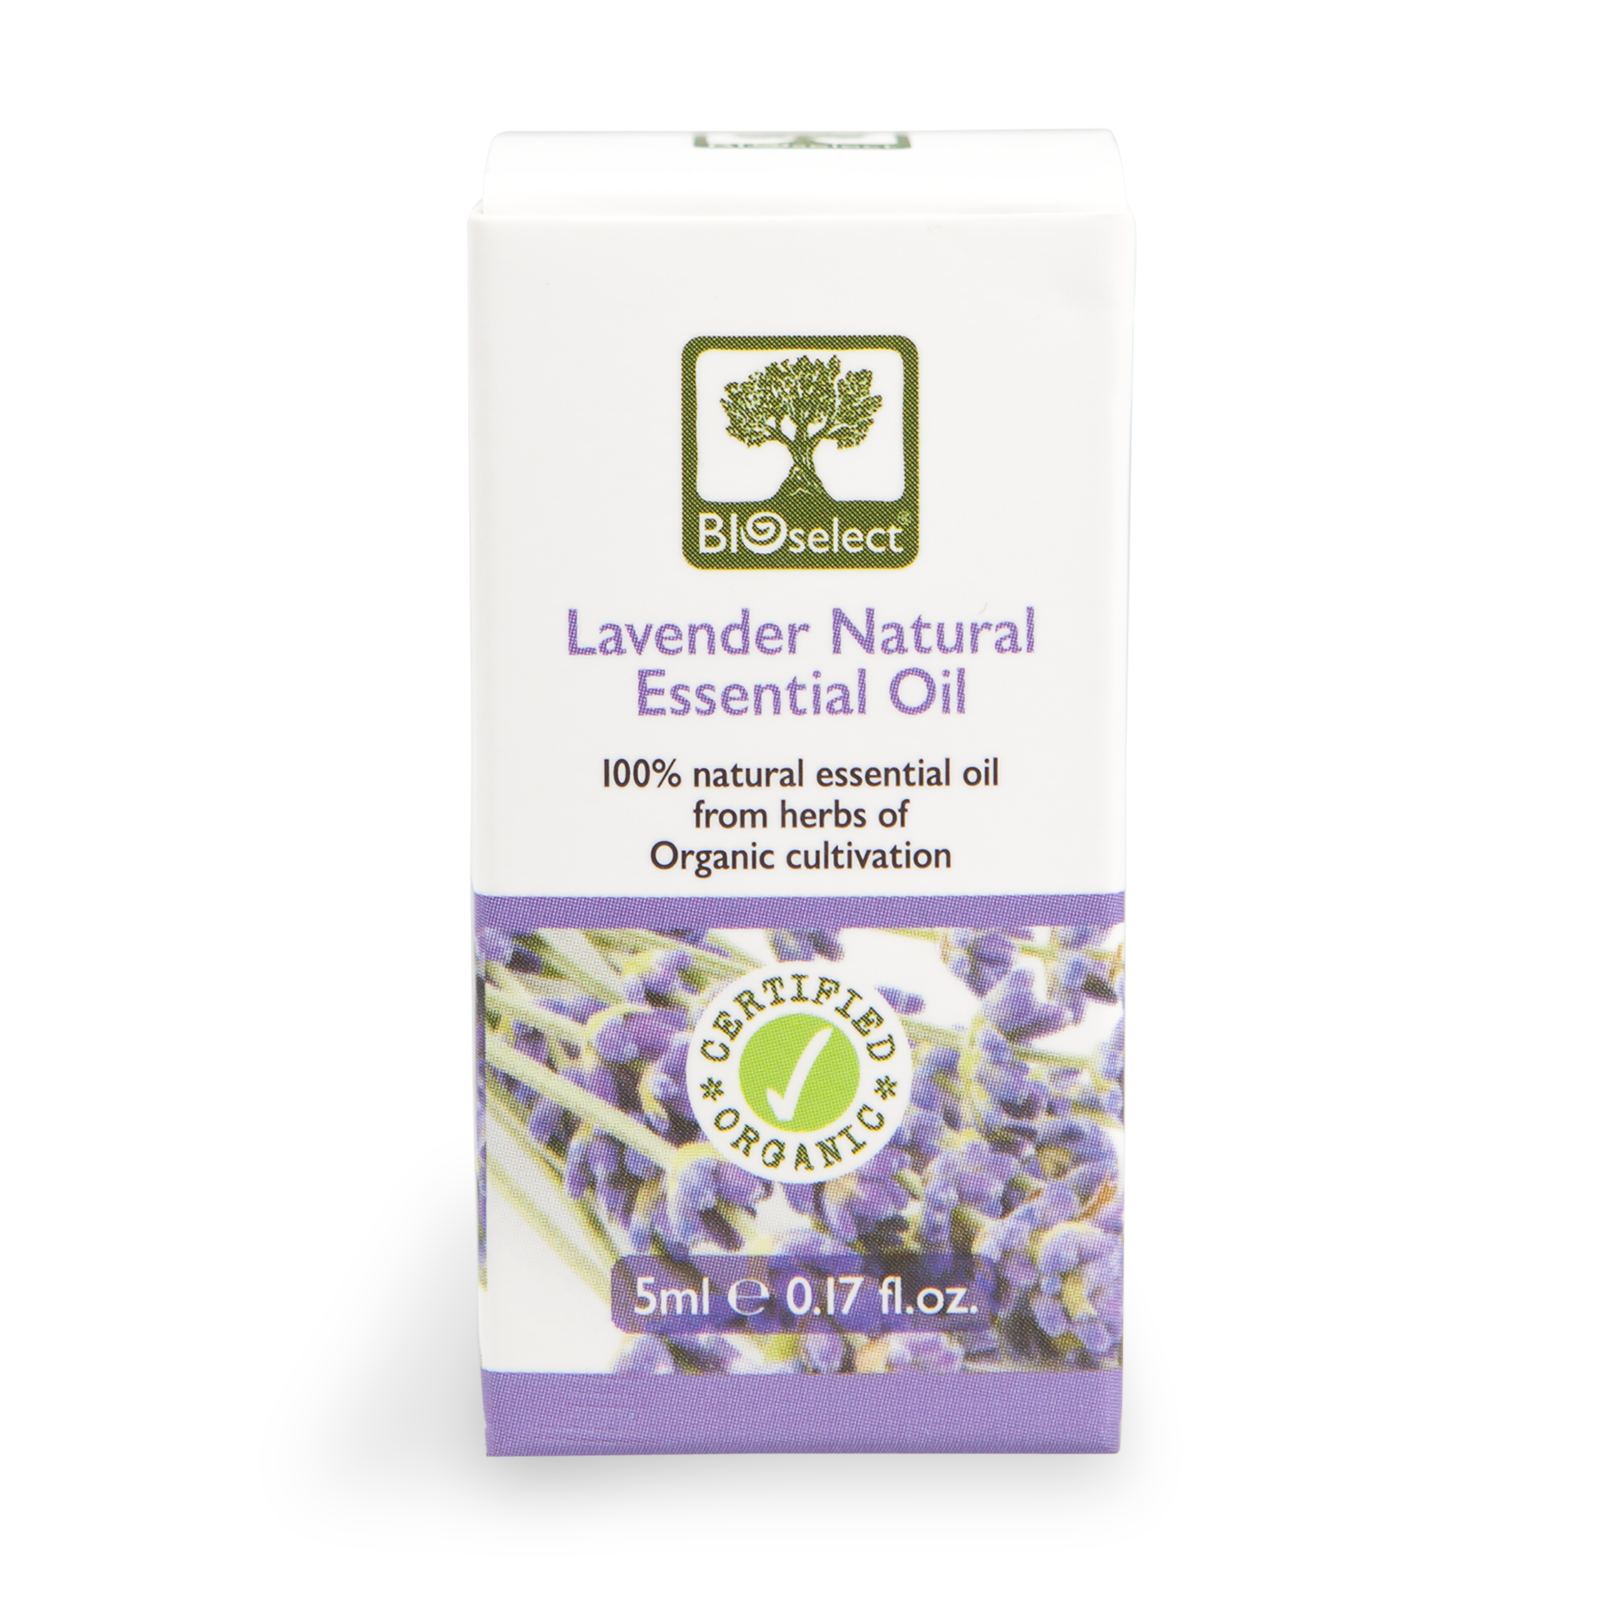 Bioselect Lavender Natural Essential Oil Certified Organic